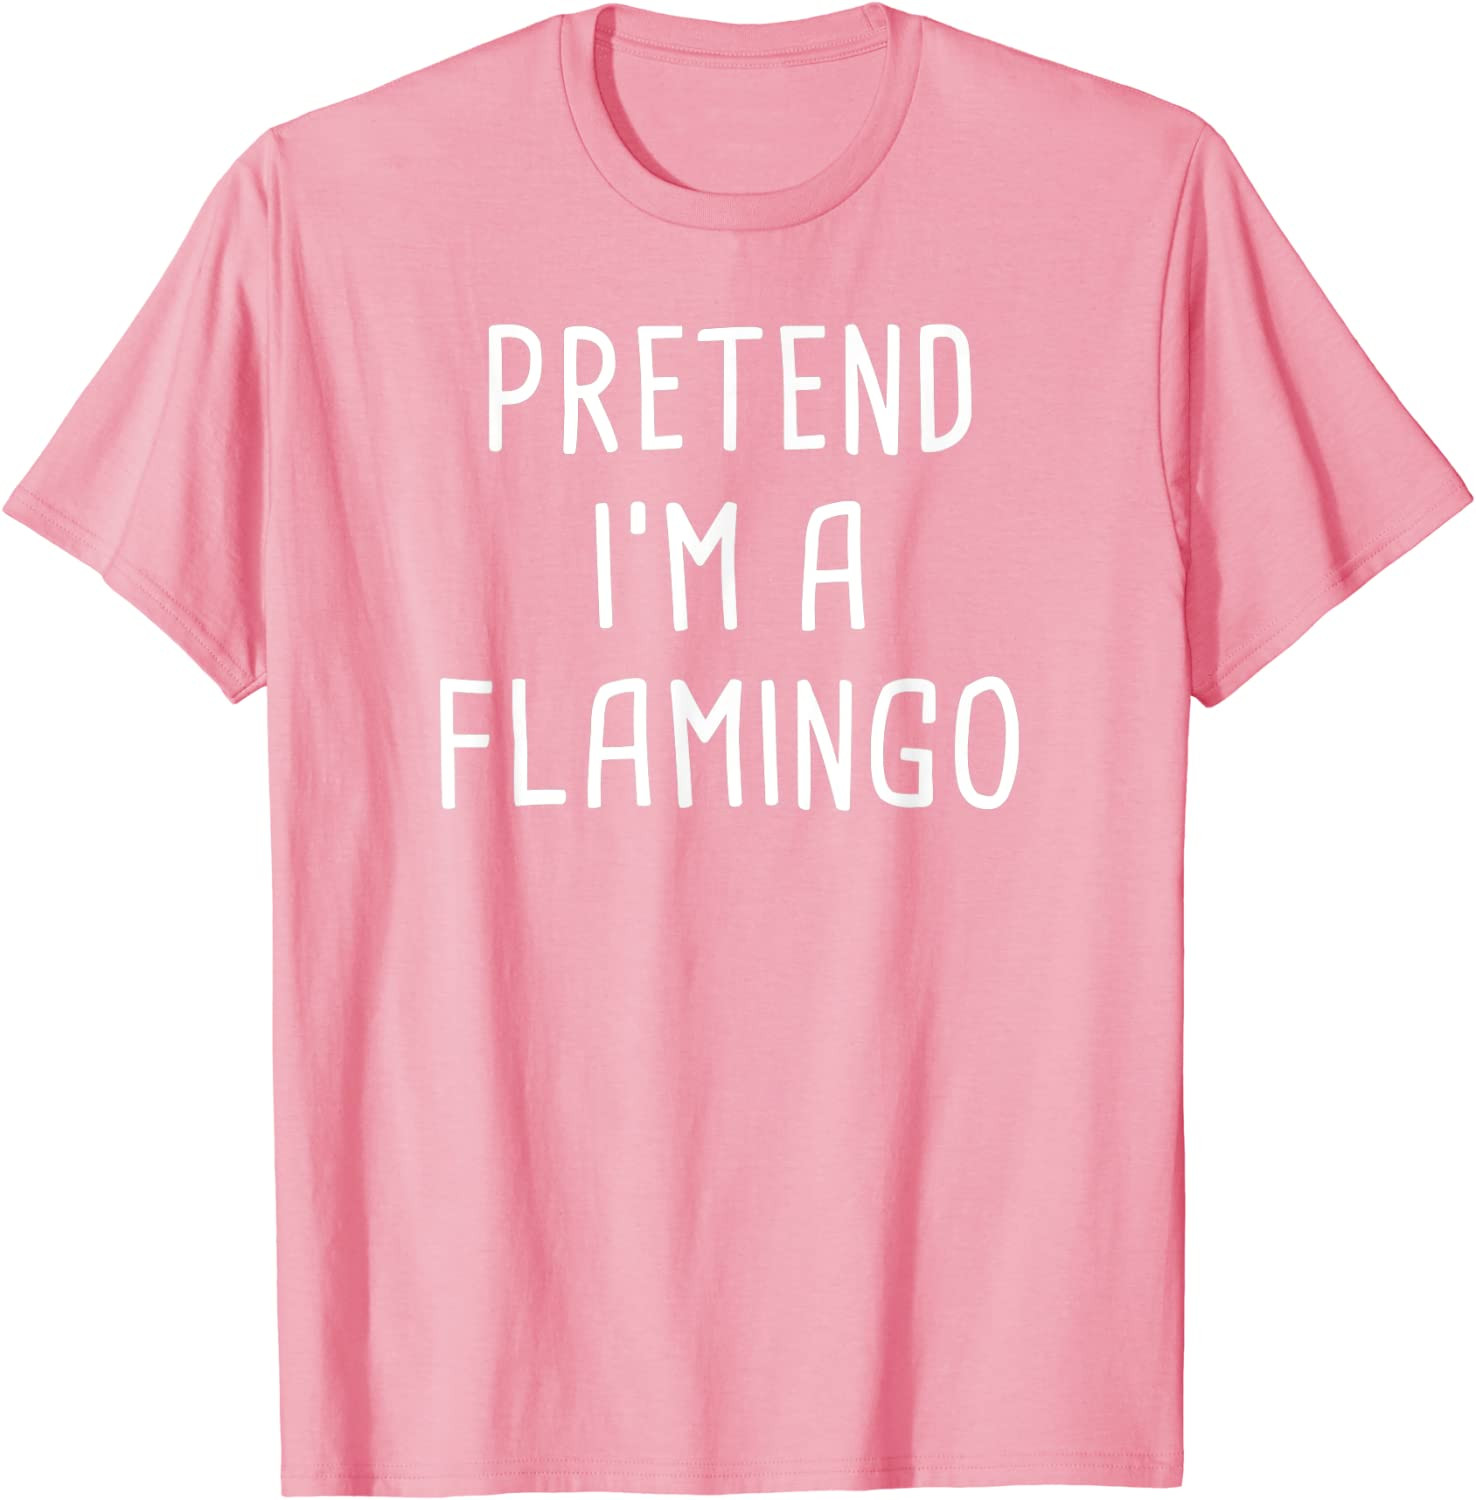 Pretend I'm A Flamingo Halloween Costume T-Shirt